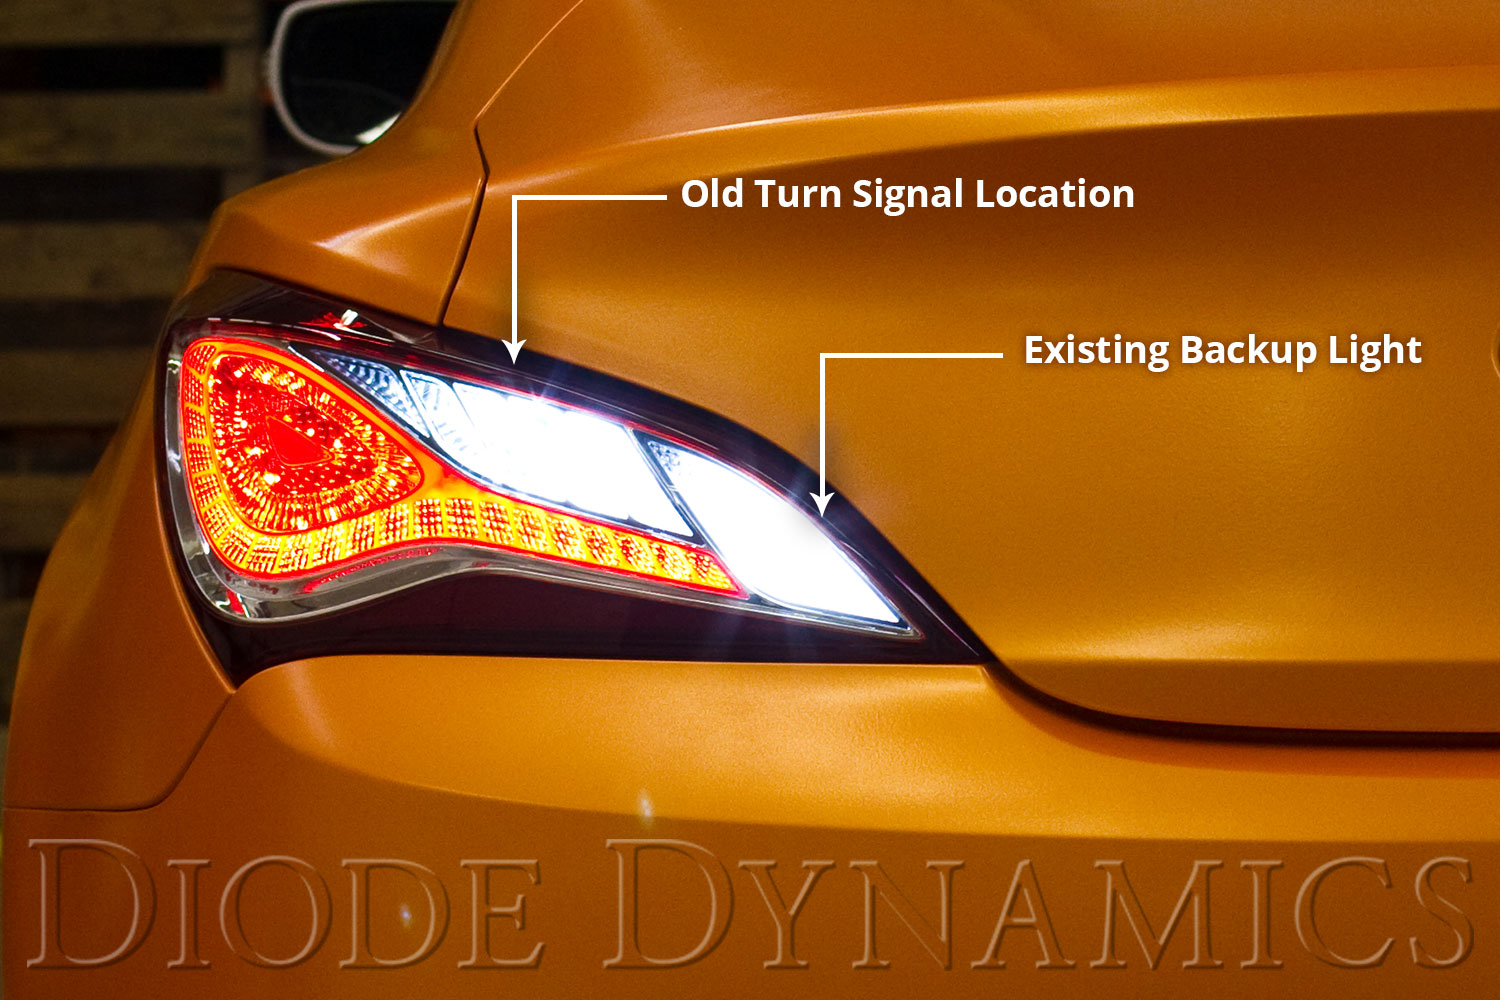 Hyundai Genesis Coupe Tail as Turn Kit w/ Backup Stage 1 Diode Dynamics